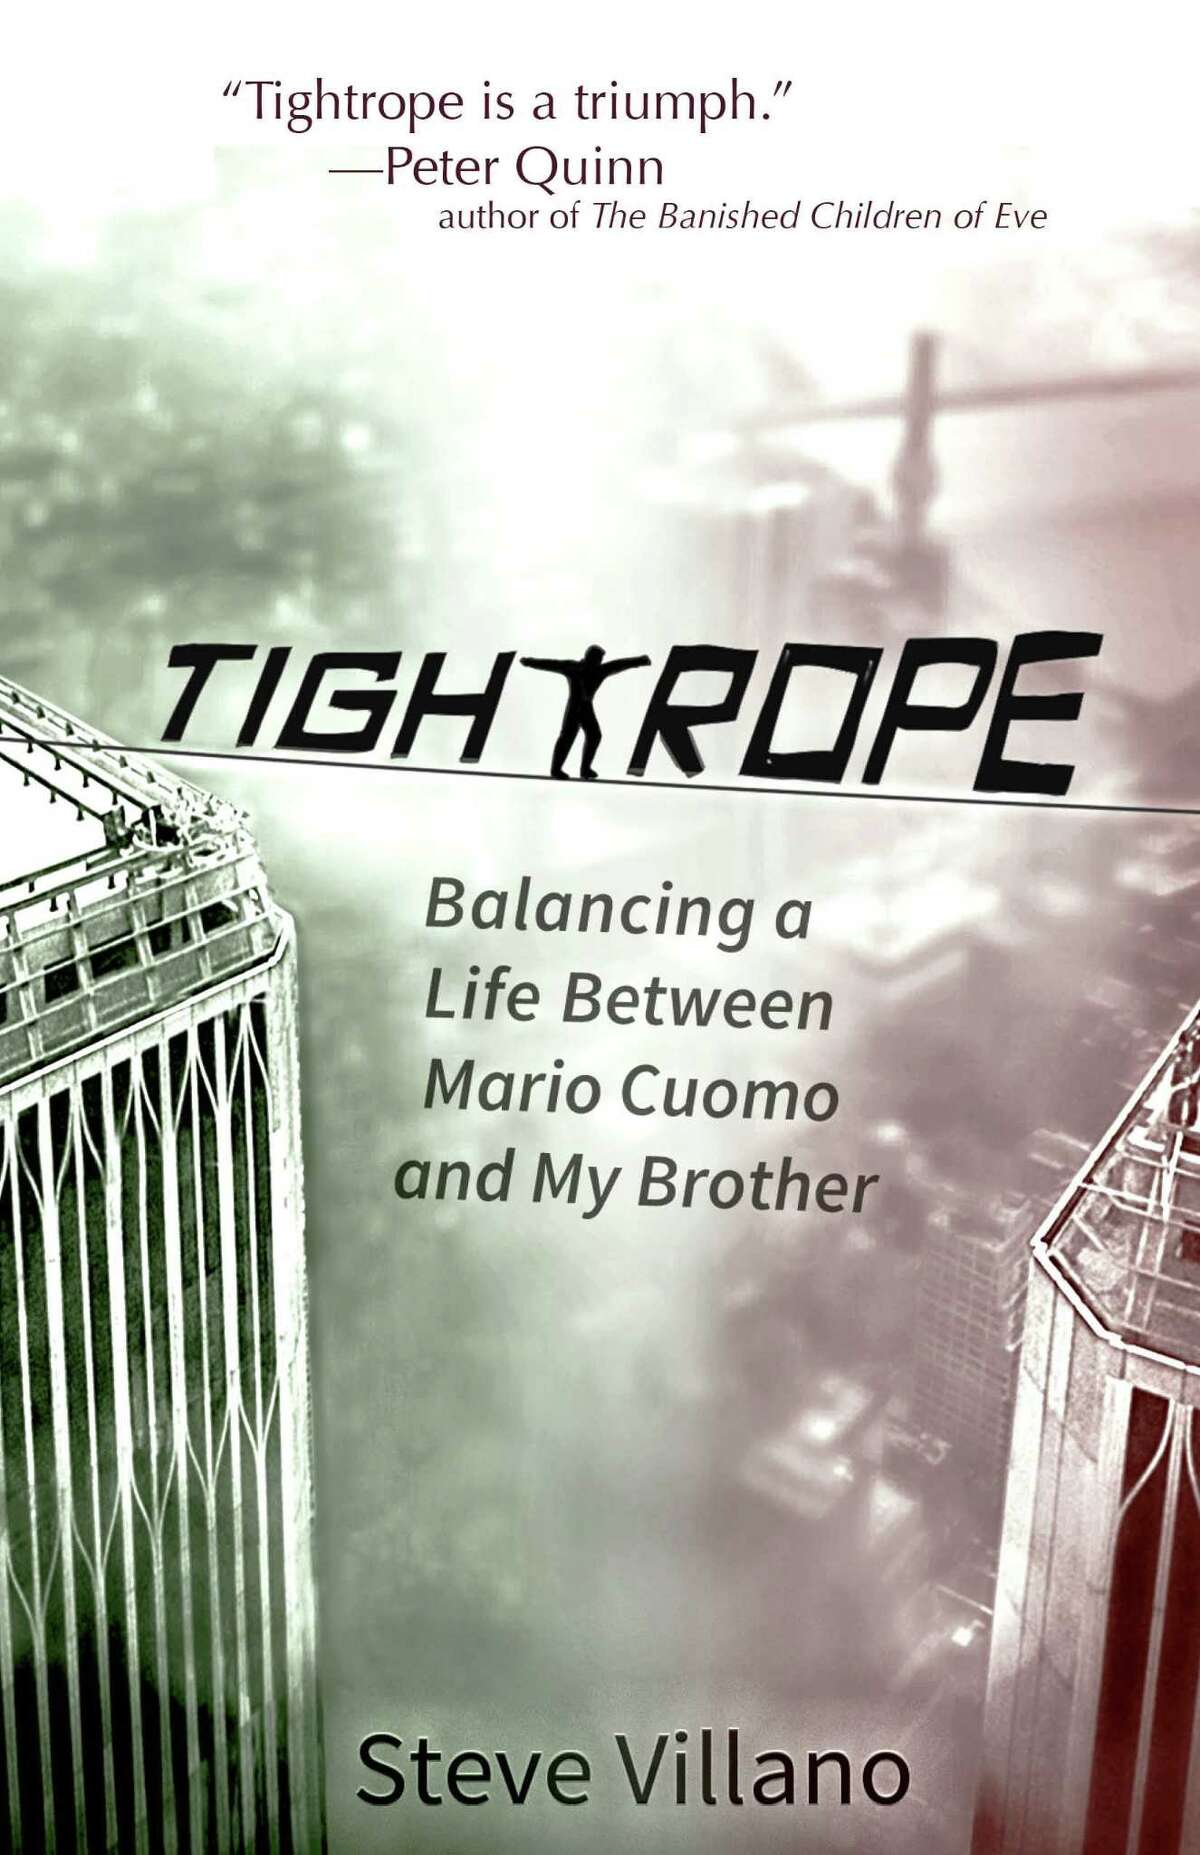 Cover of "Tightrope" by Steve Villano (Photo courtesy of Steve Villano)